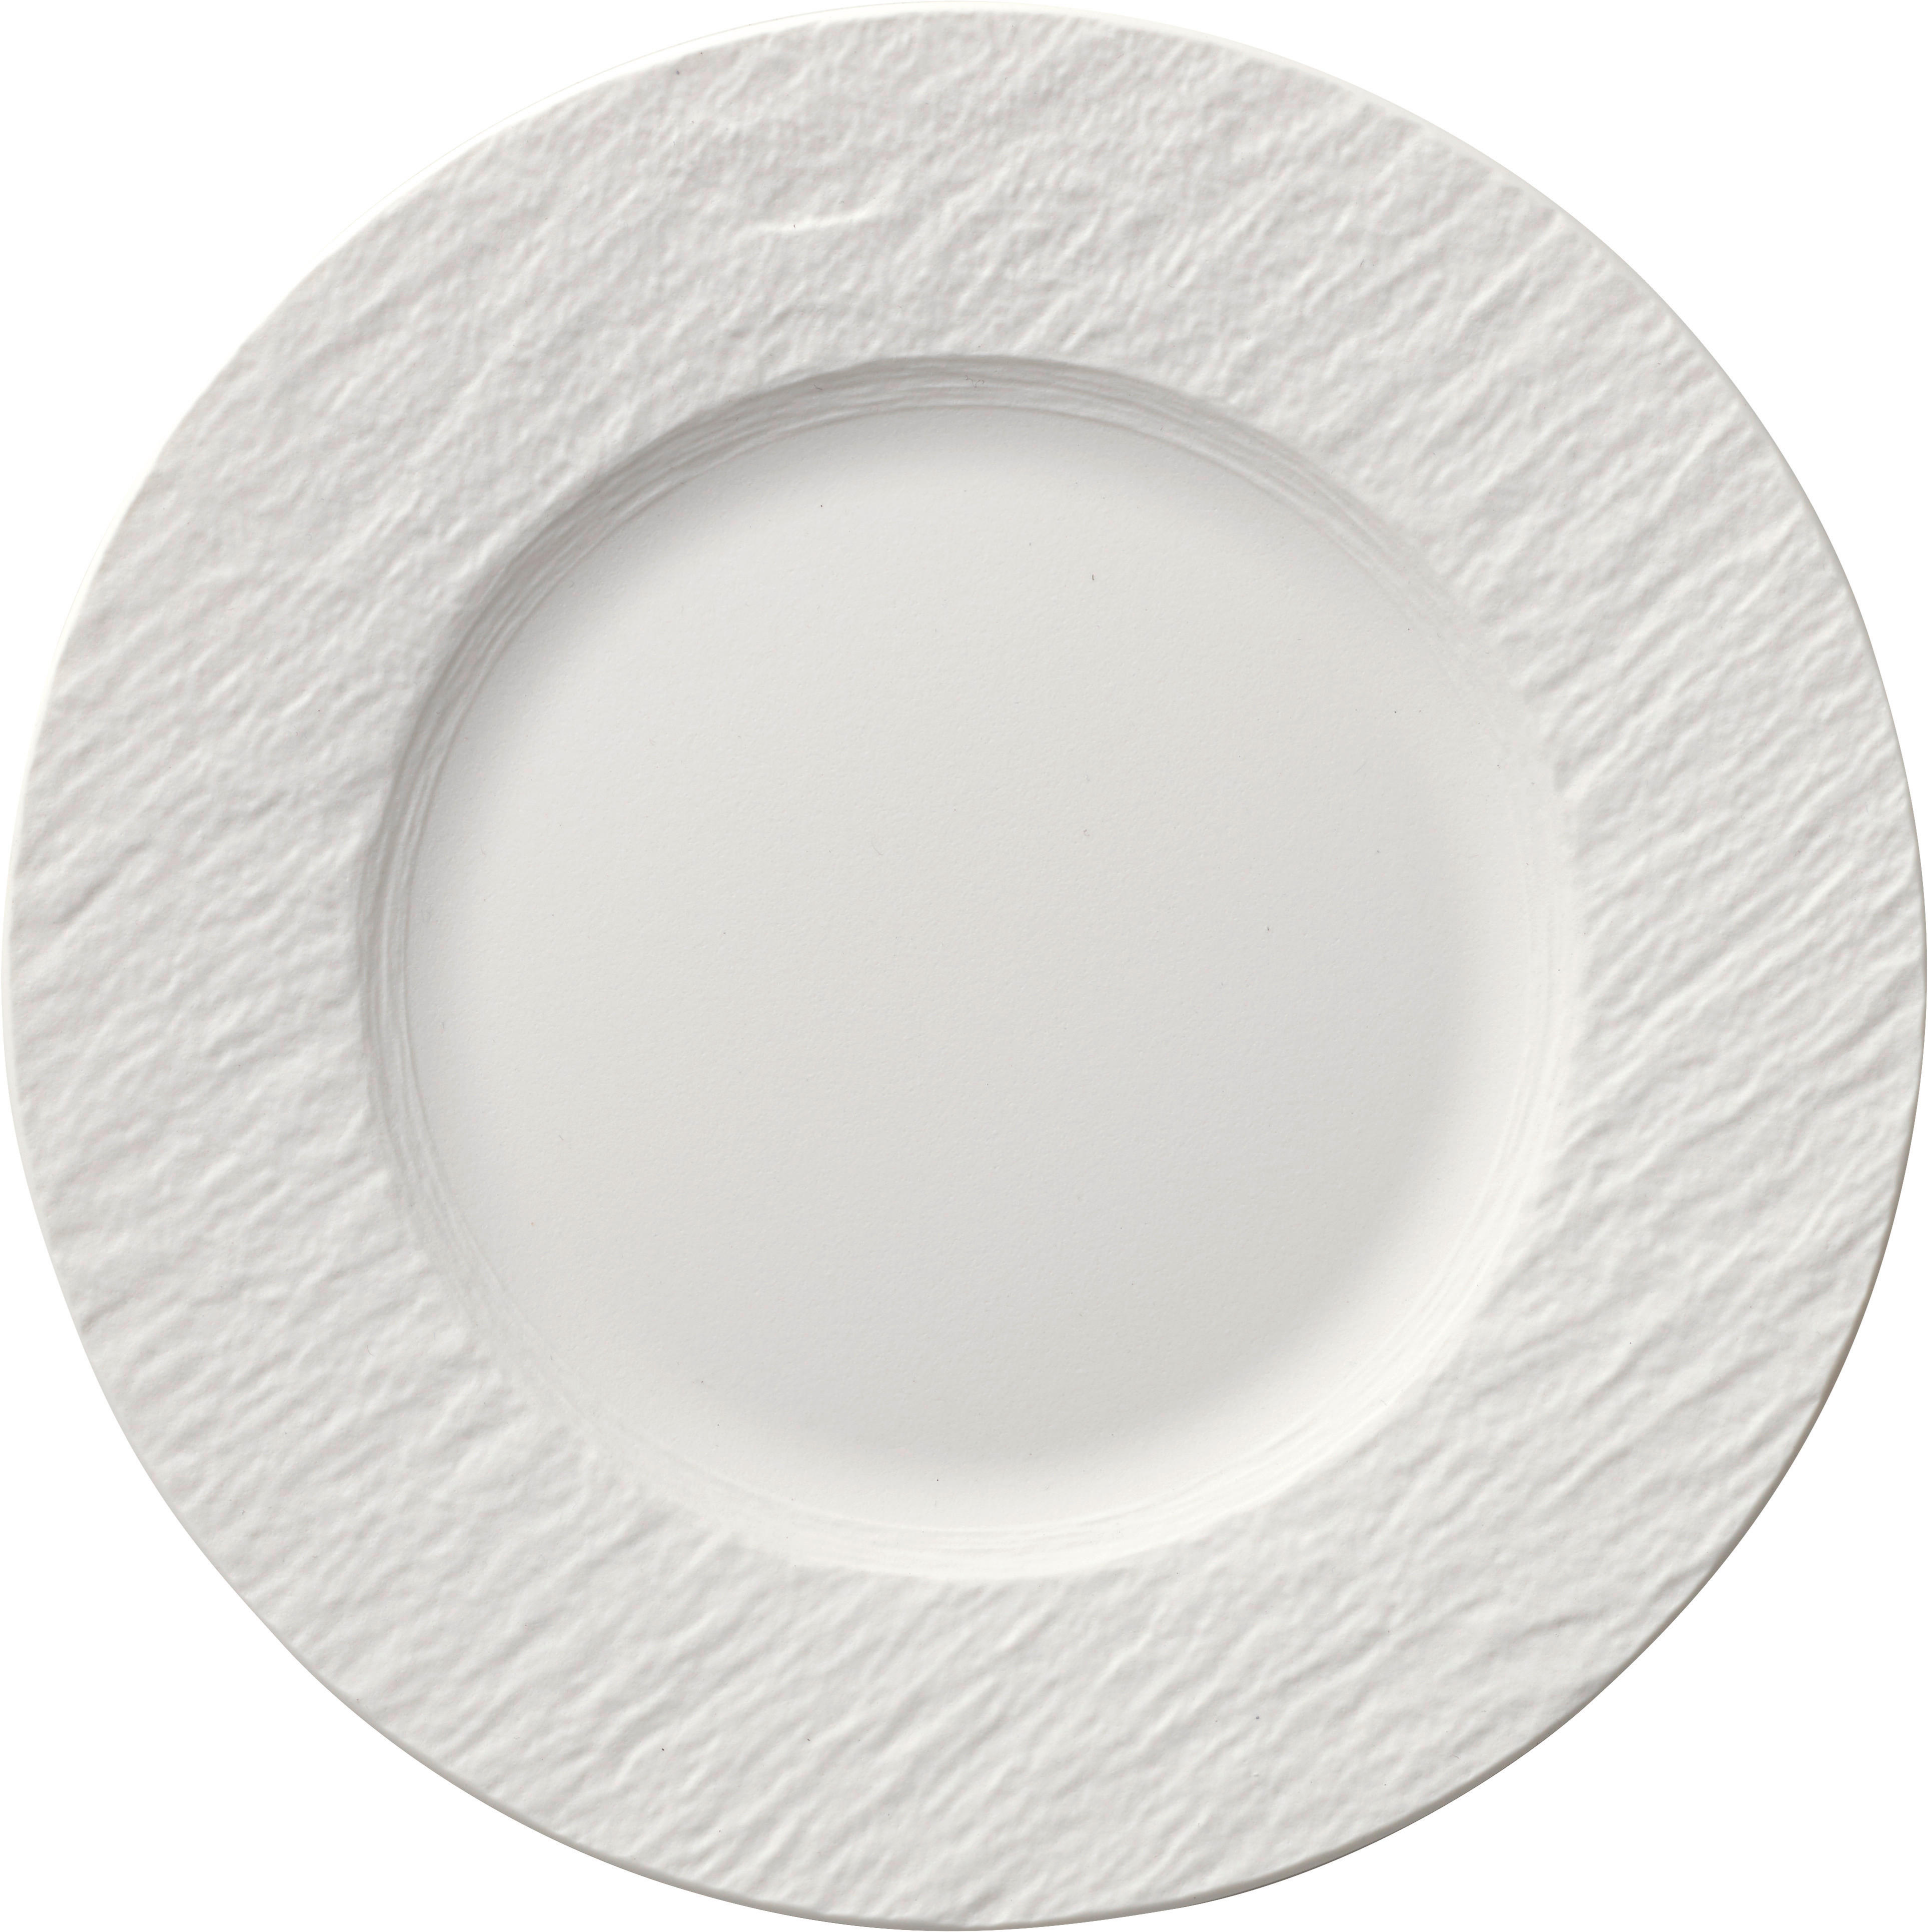 Villeroy & Boch SNÍDAŇOVÝ TALÍŘ, keramika, 22 cm - bílá